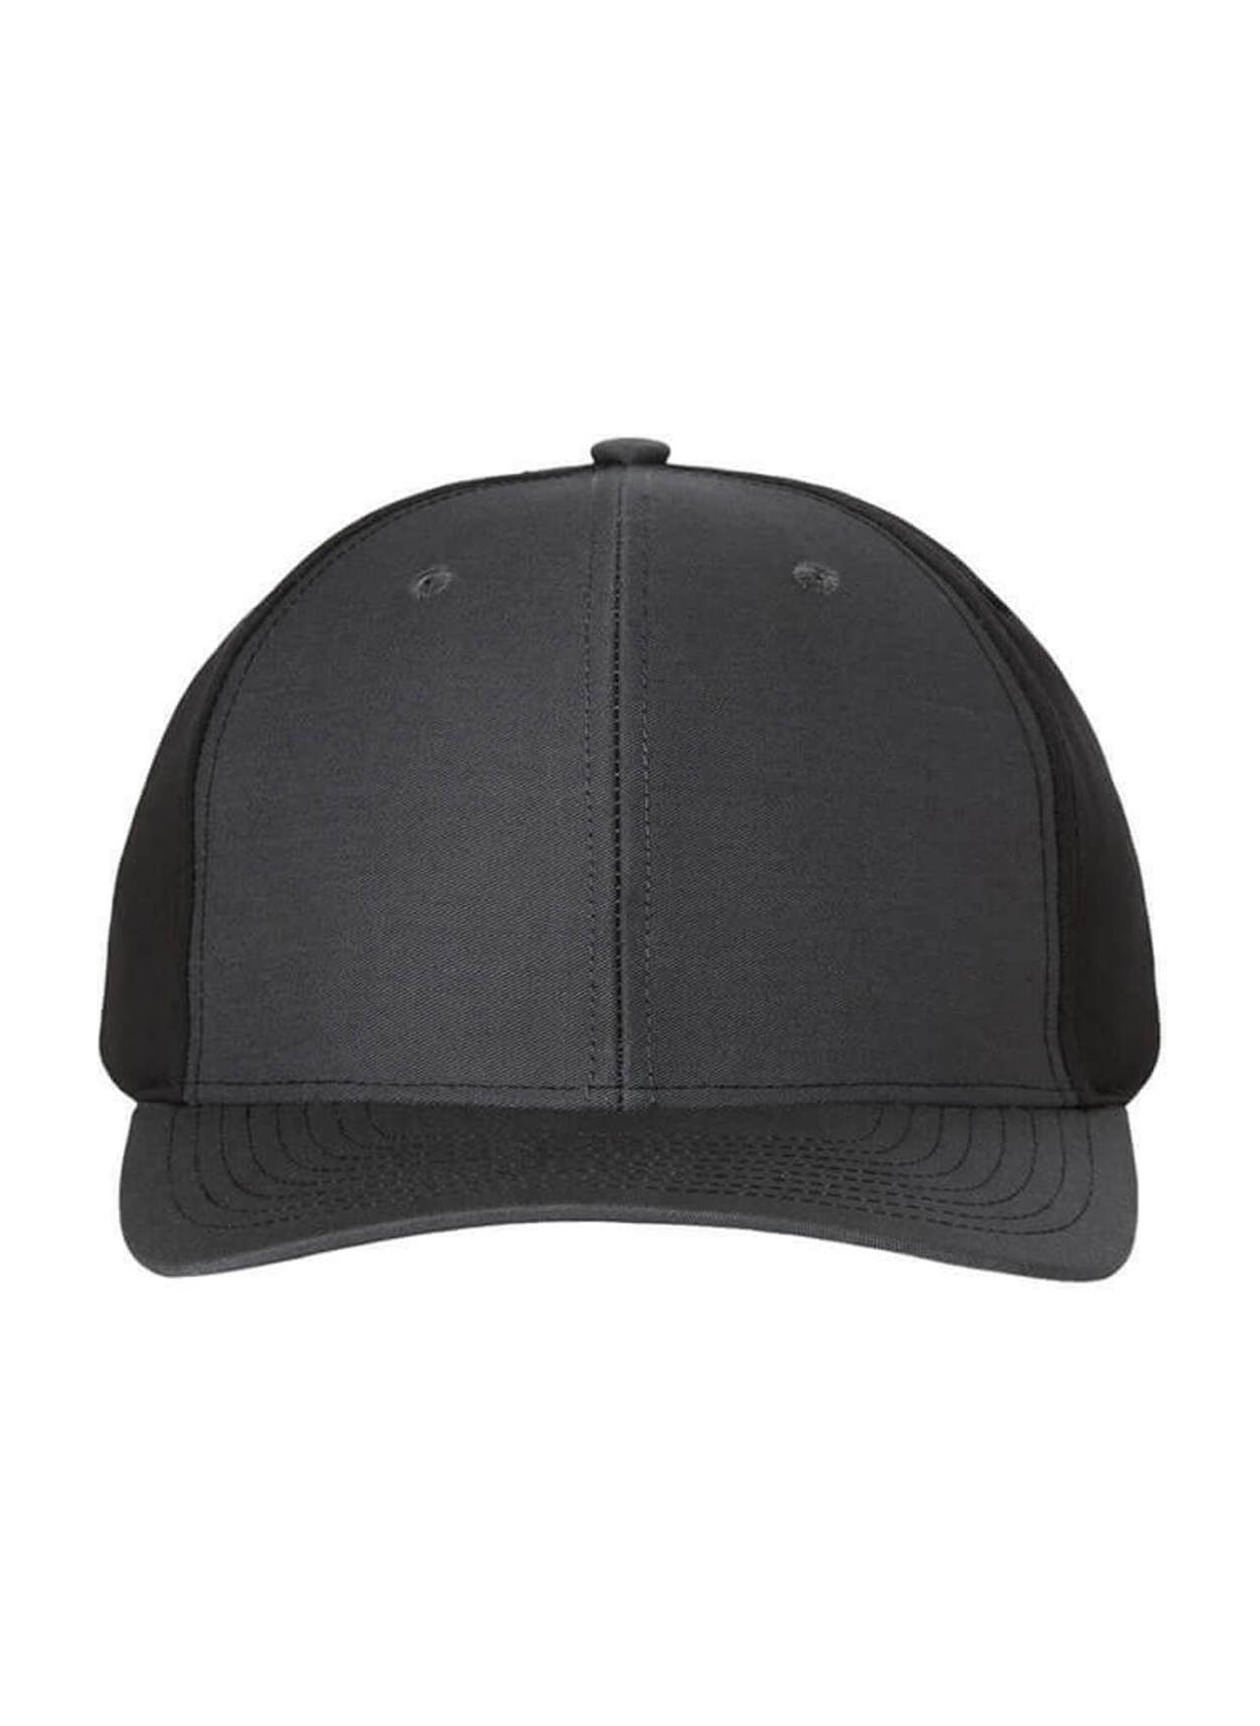 Richardson Charcoal / Black Richarson Twill Back Trucker Hat